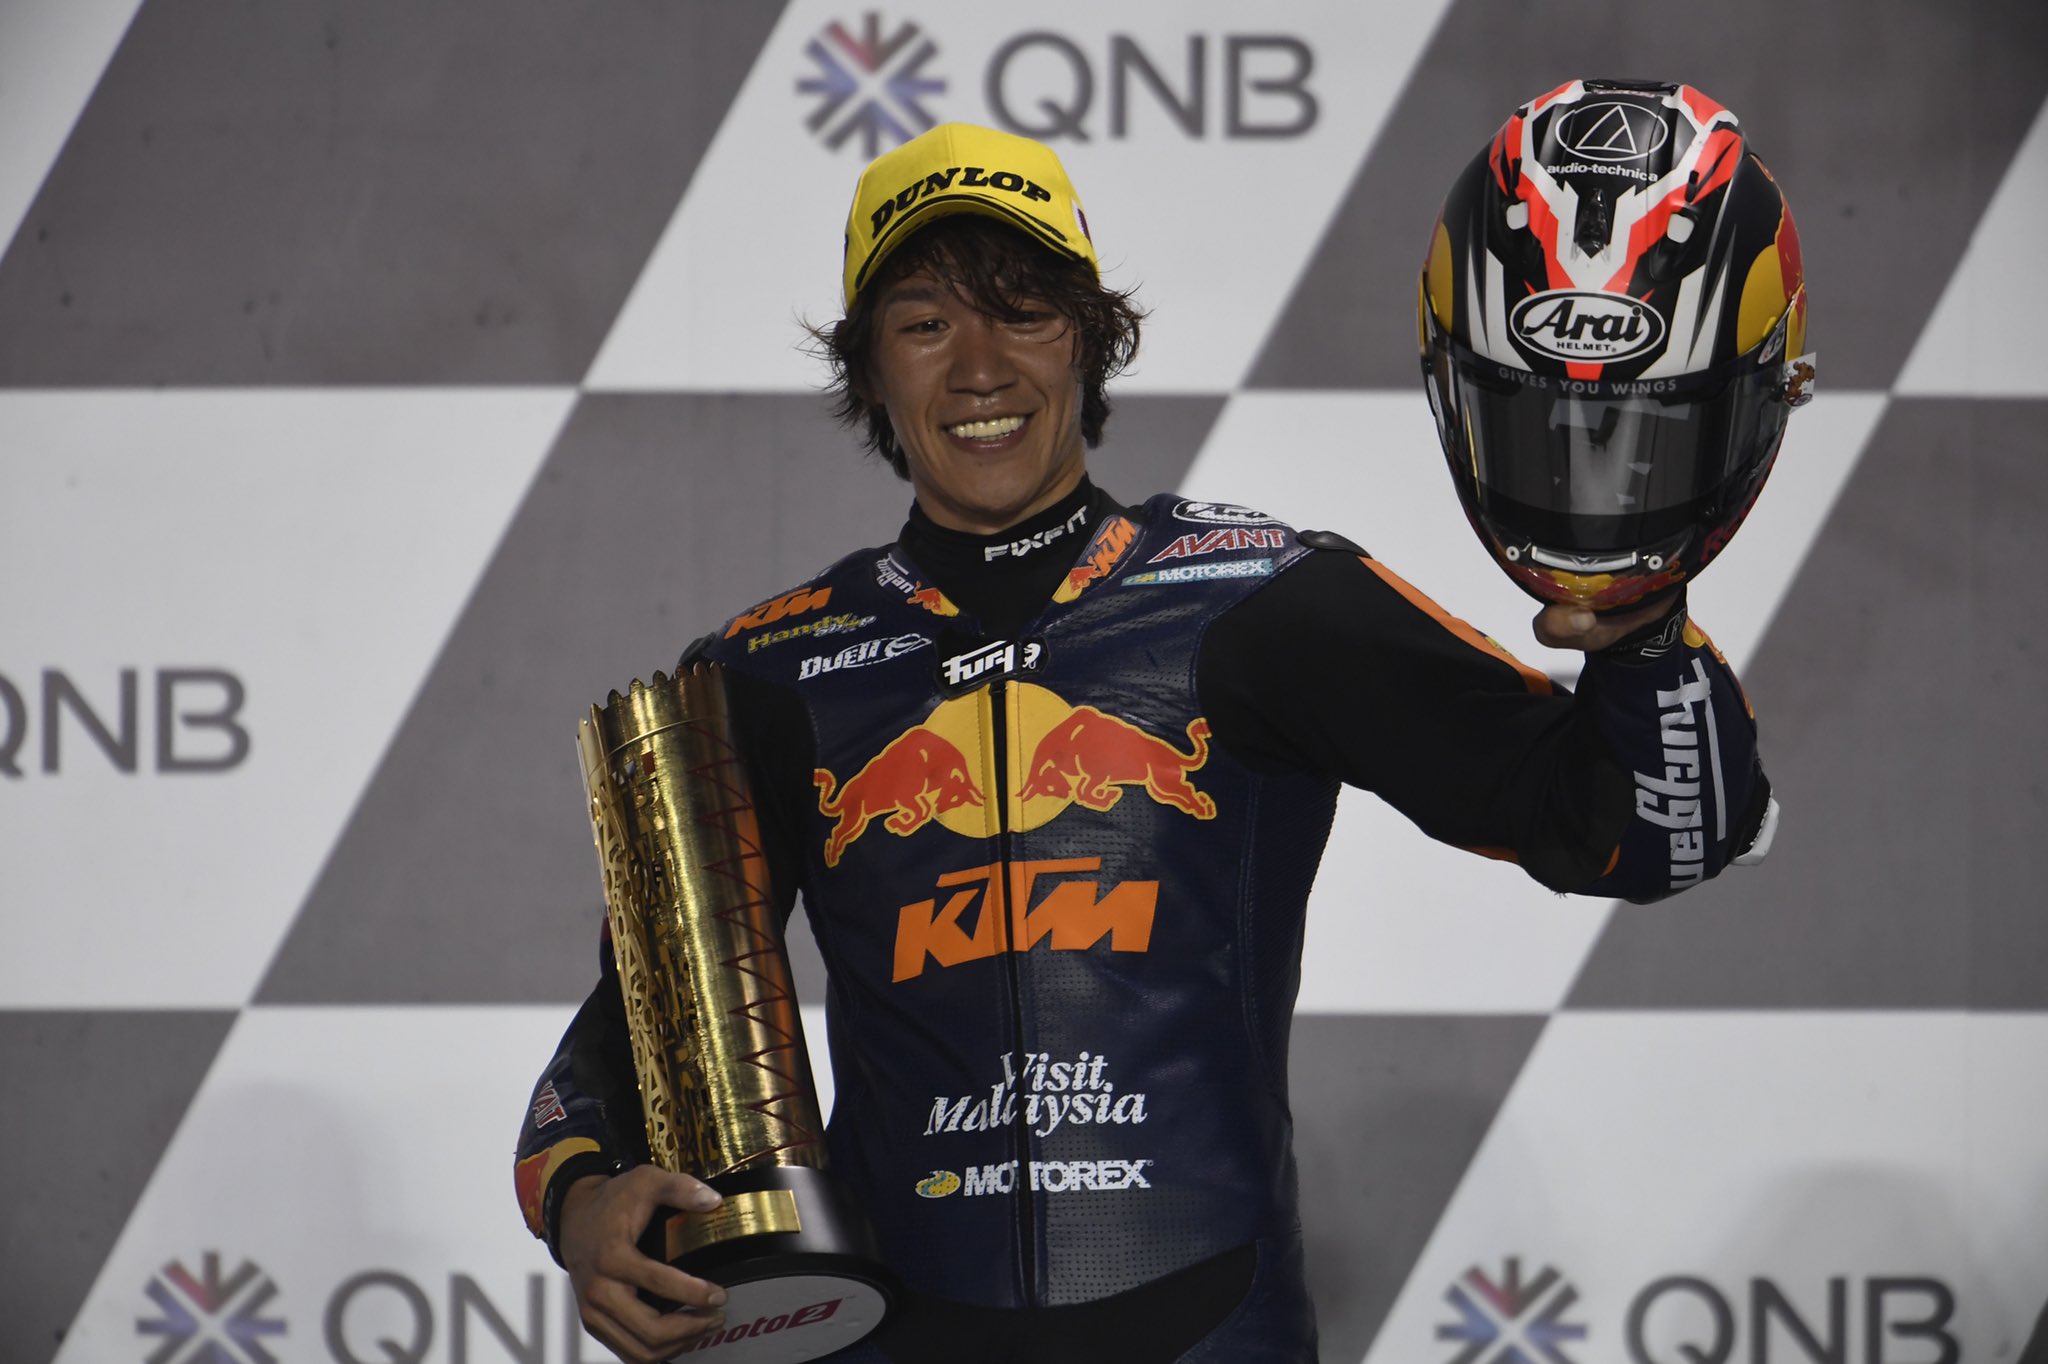 Nagashima wins Moto2 race